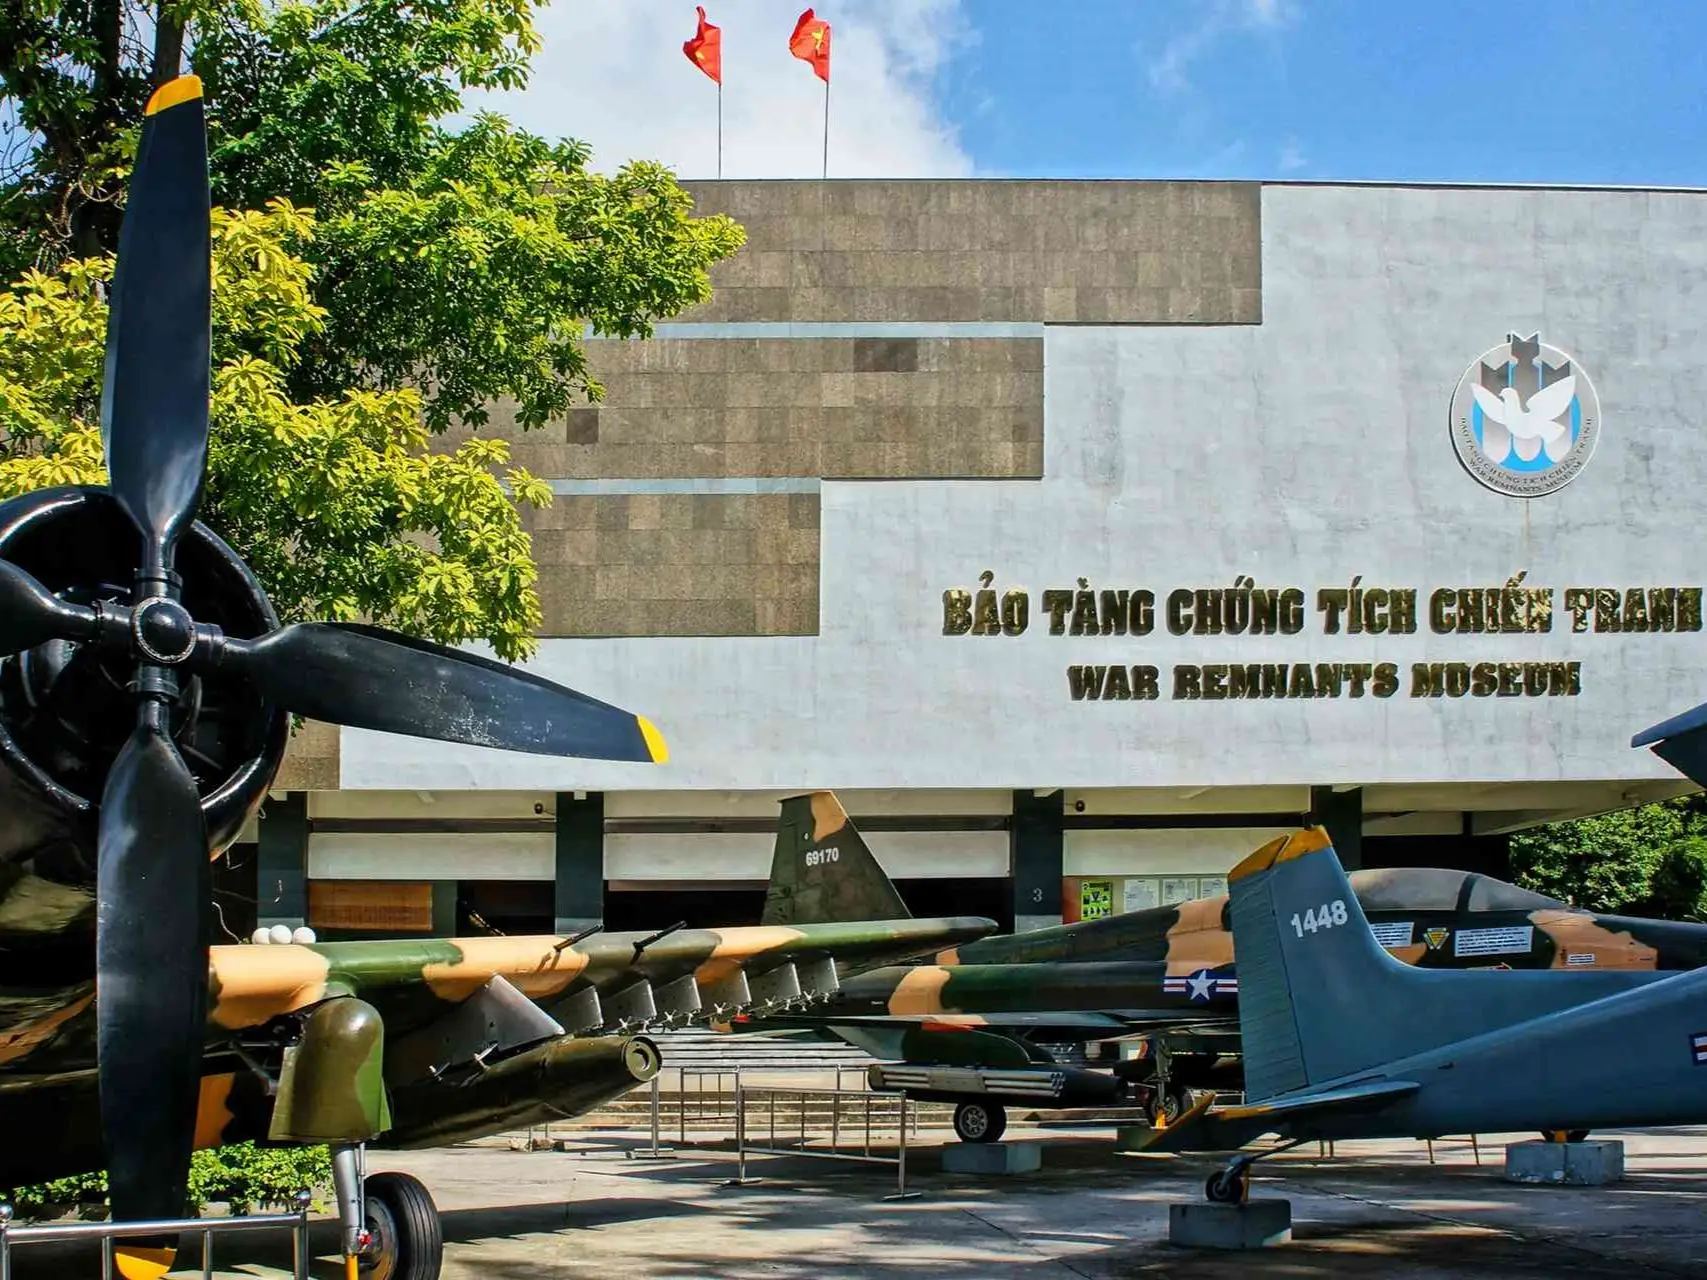 Amazing Hanoi and Ho Chi Minh Tour – Vietnam 7 Days Tour